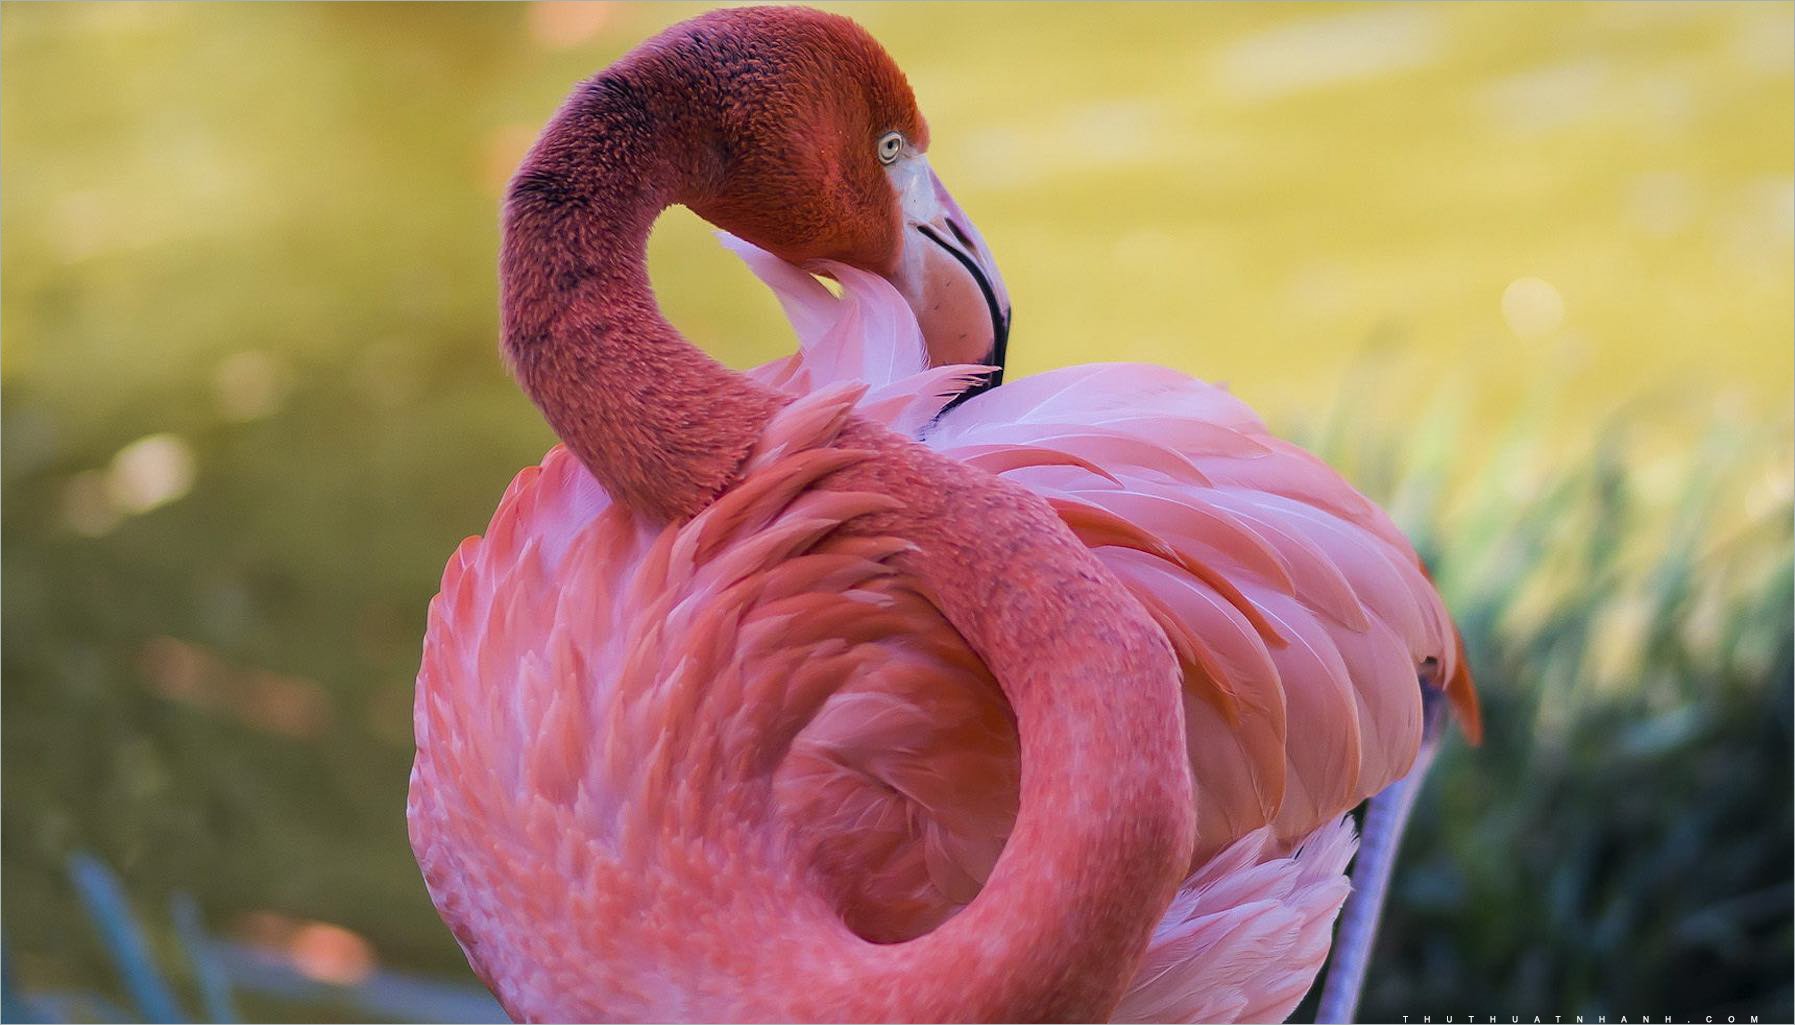 Фломинго. Розовый Фламинго птица. Обыкновенный Фламинго. Фламинго обыкновенный розовый. Розовый Фламинго 8к.